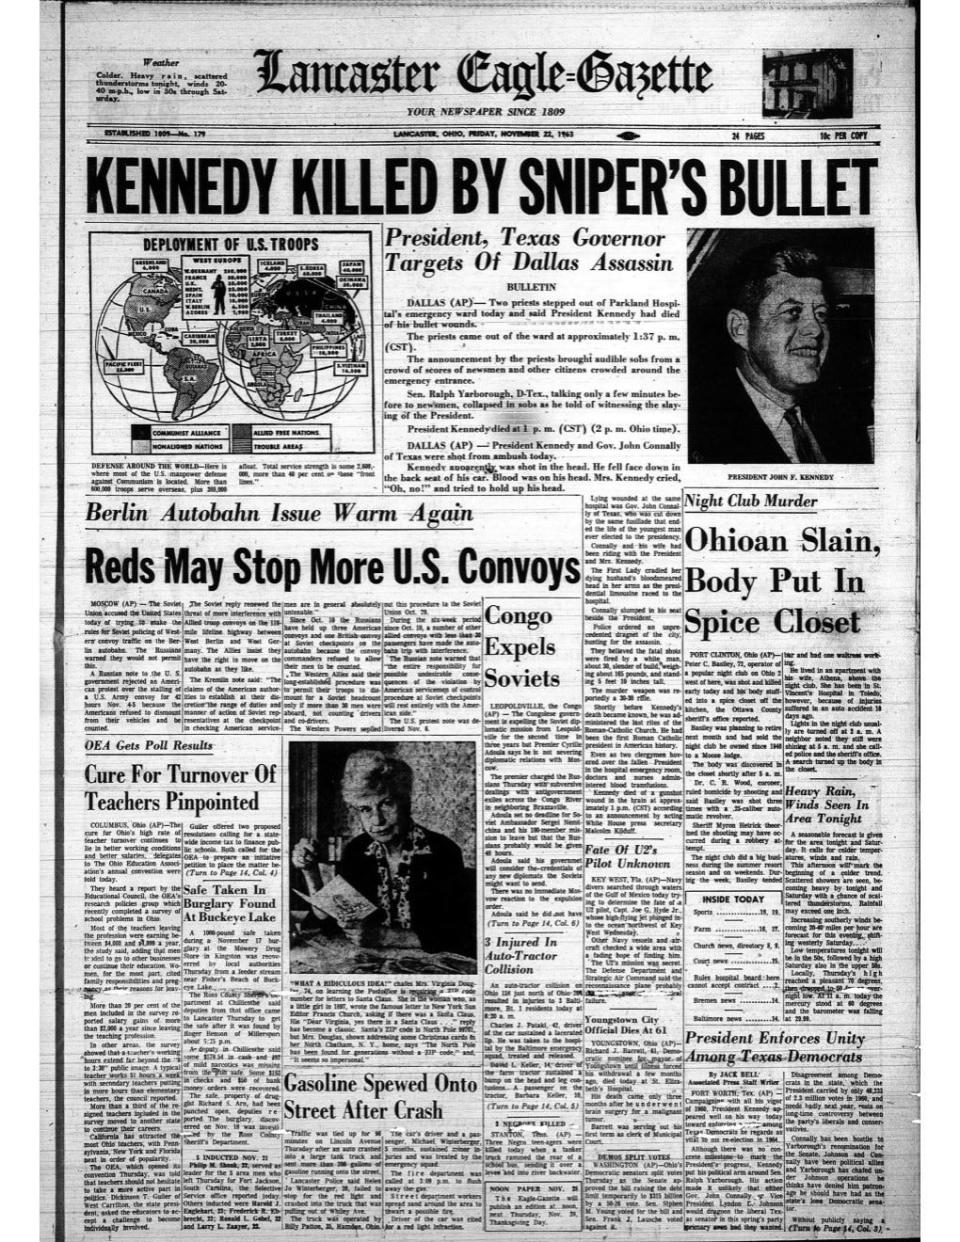 The front page of the Nov. 23, 1963 Lancaster Eagle-Gazette.